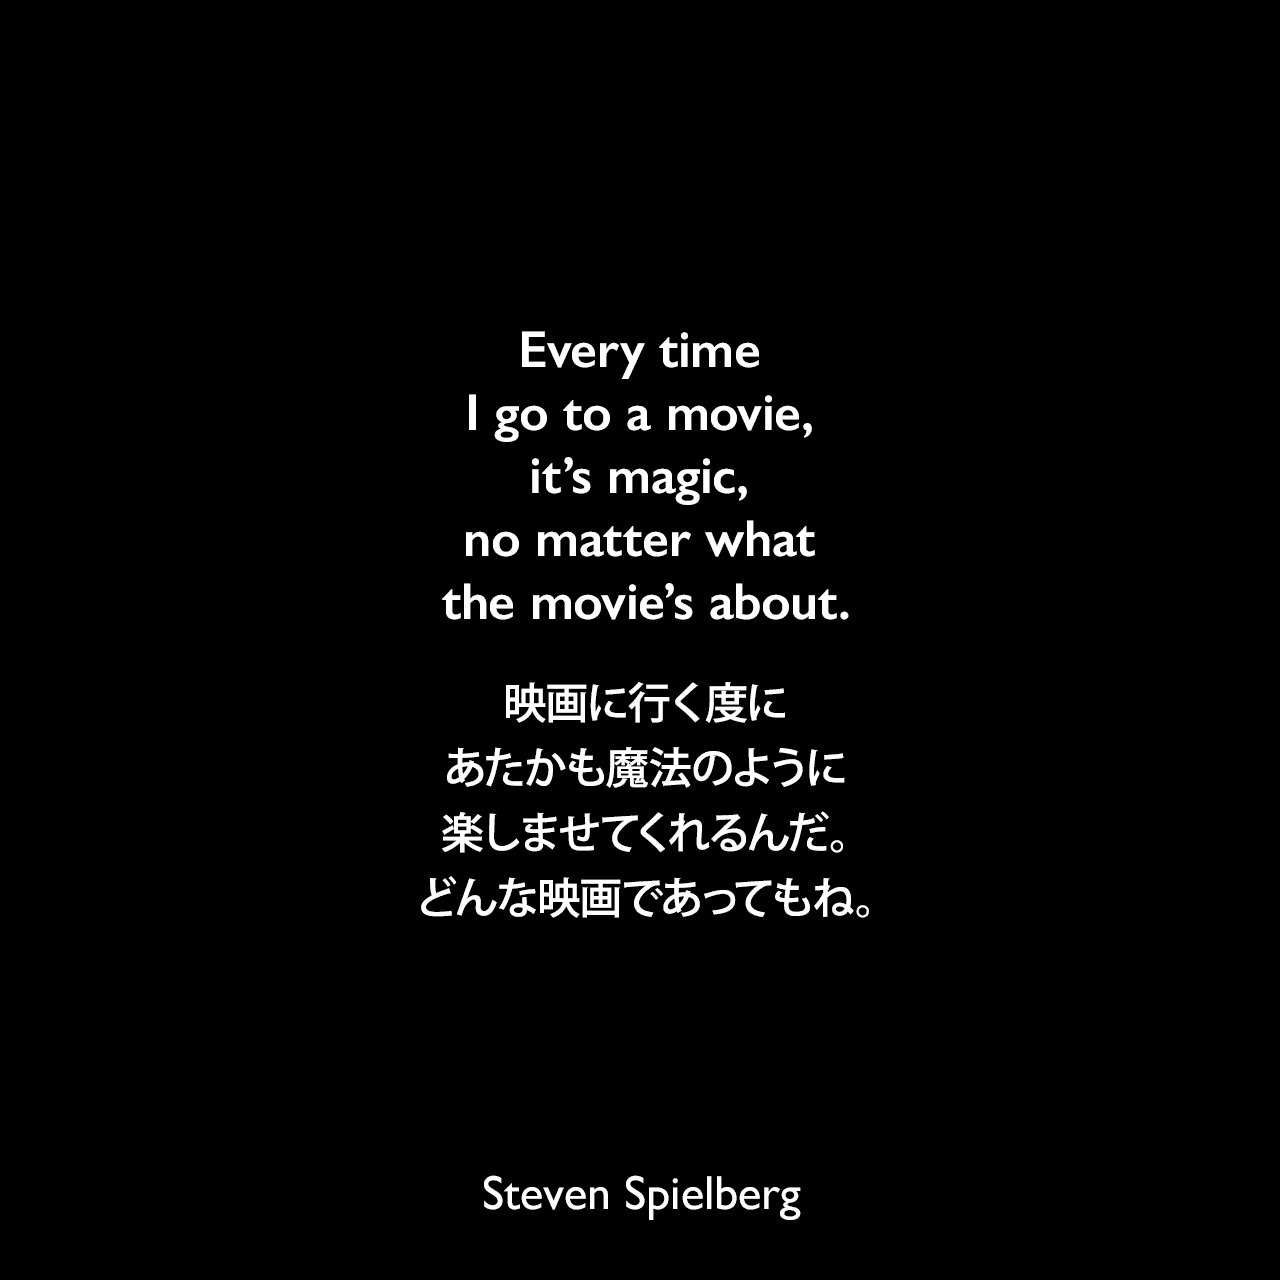 Every time I go to a movie, it’s magic, no matter what the movie’s about.映画に行く度に、あたかも魔法のように楽しませてくれるんだ。どんな映画であってもね。Steven Spielberg